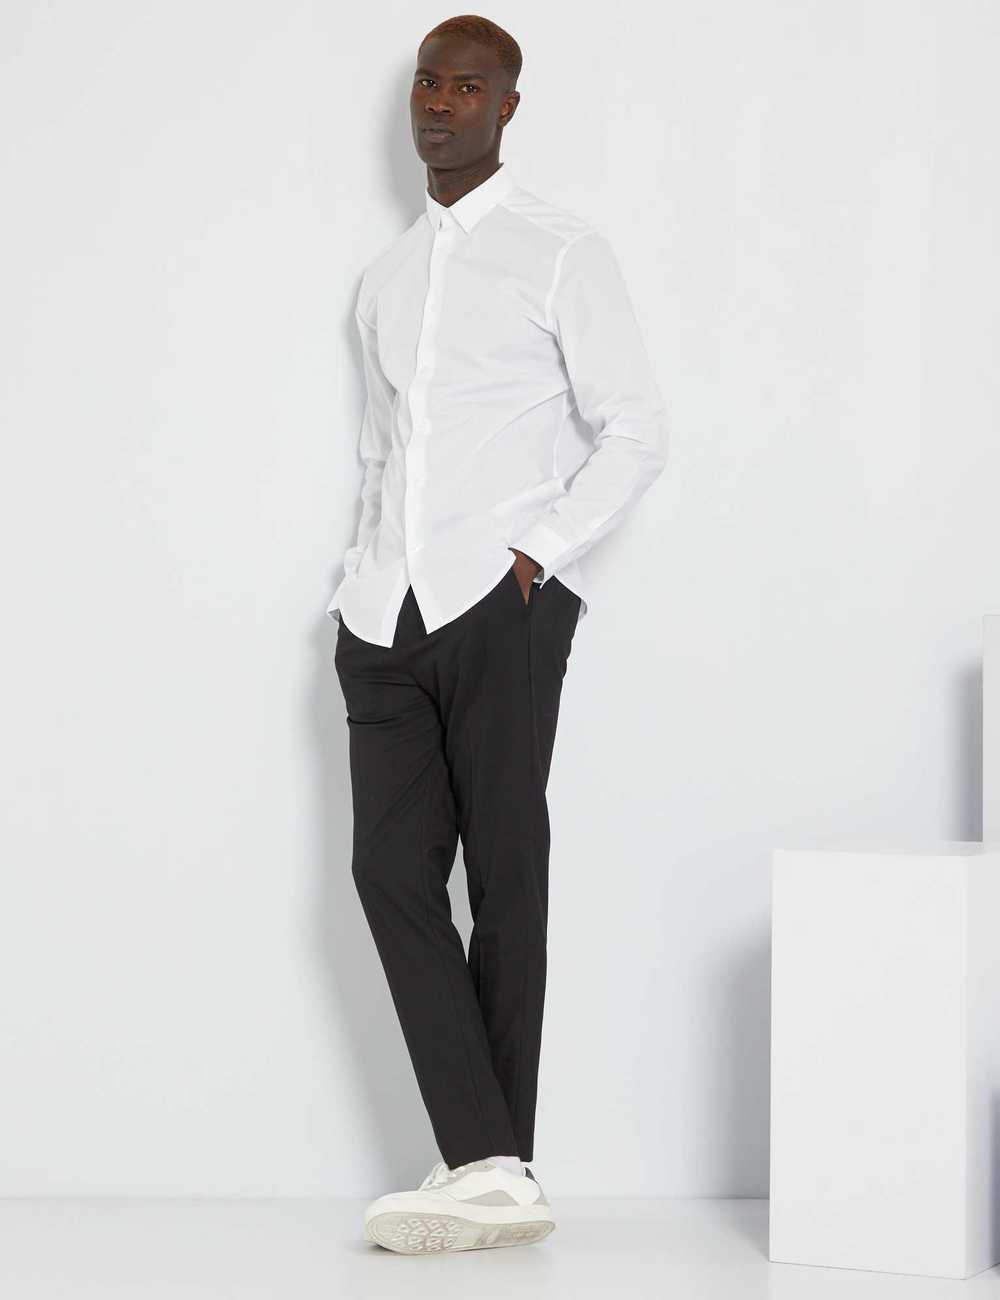 Buy Straight white shirt Online in Dubai & the UAE